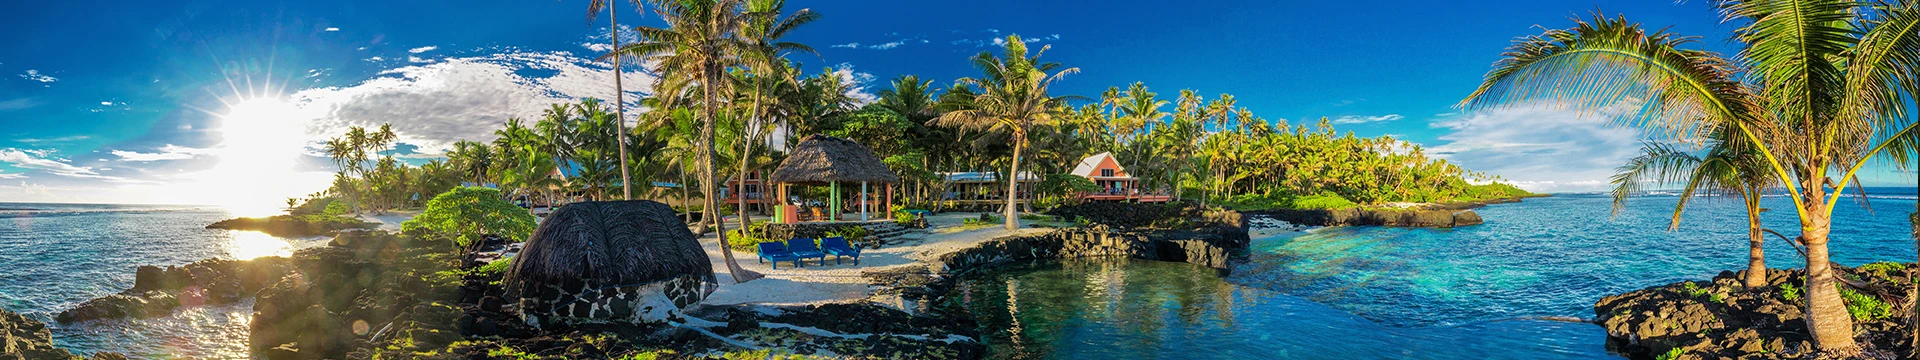 Hotels in Samoa